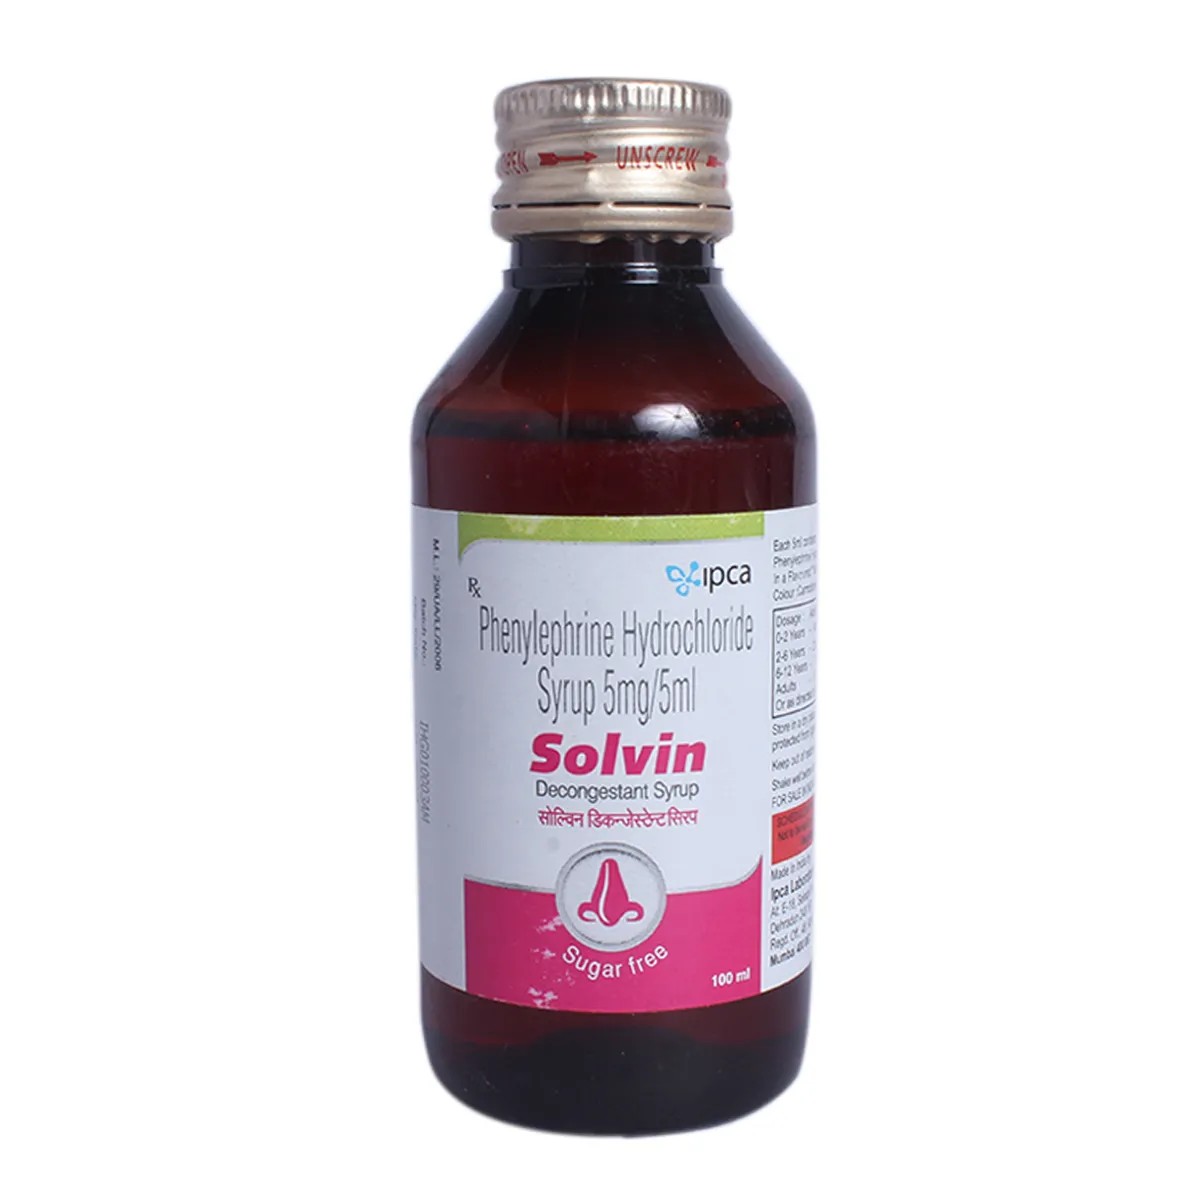 Solvin Decongestant Syrup